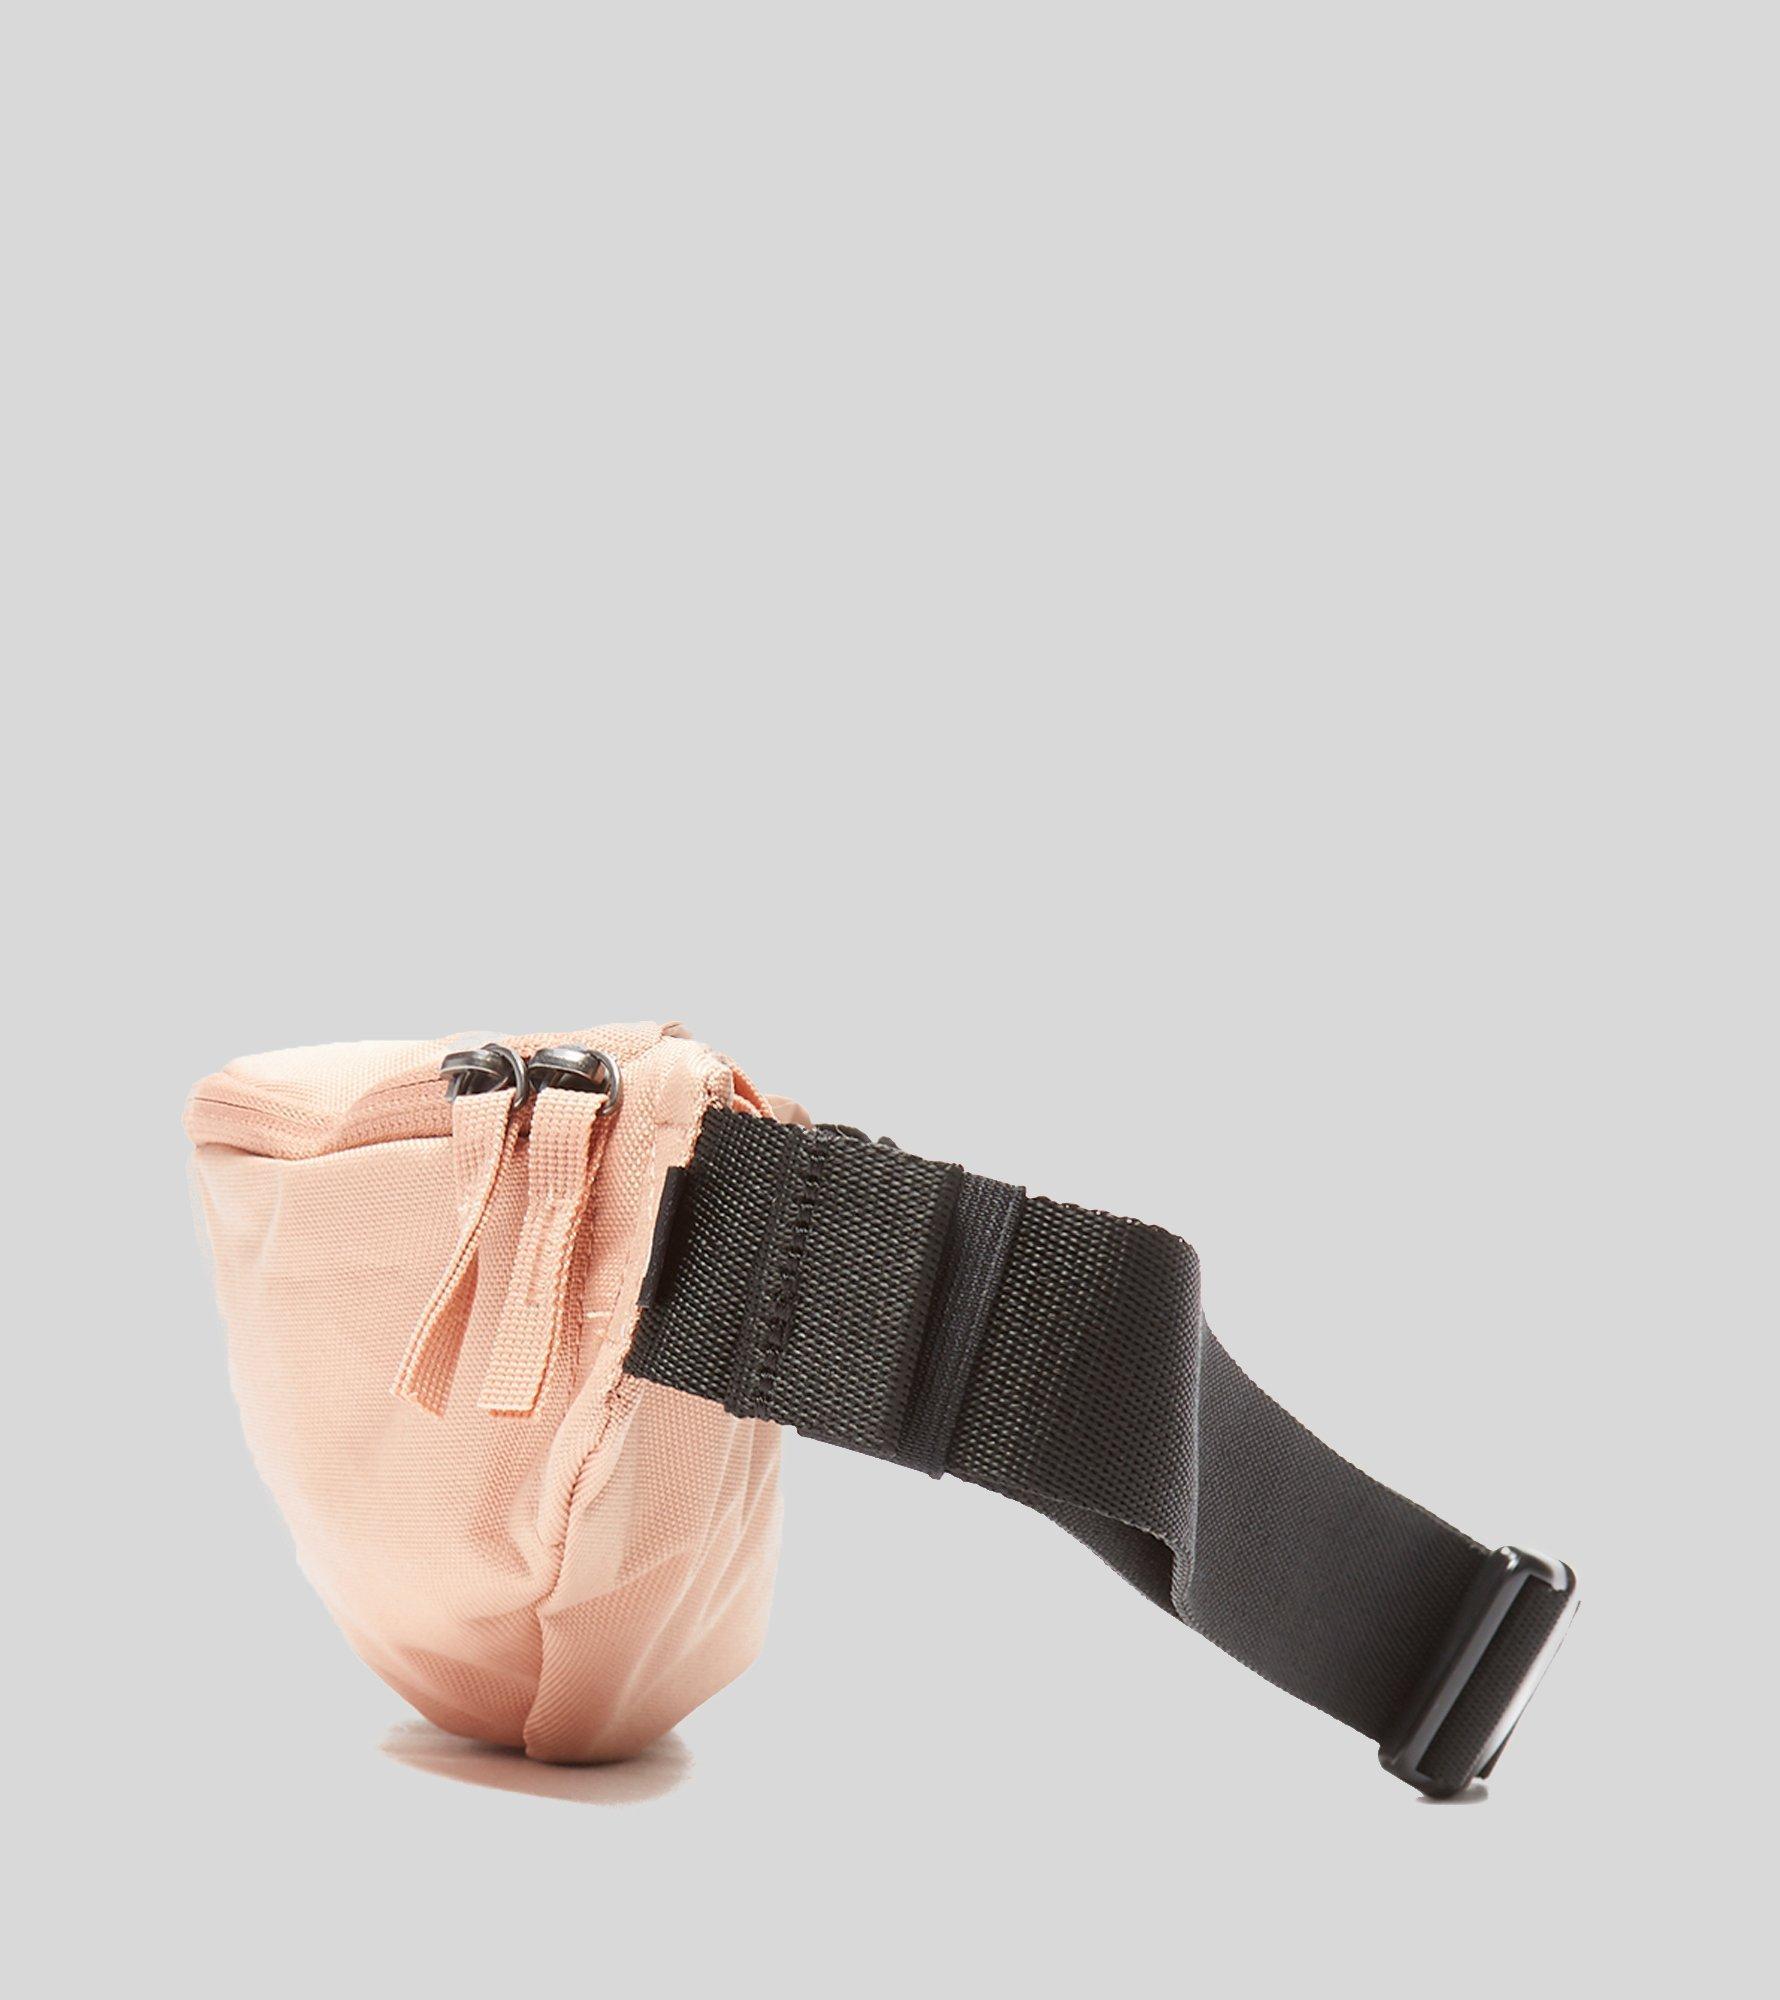 Nike Heritage Bum Bag in Pink for Men - Lyst